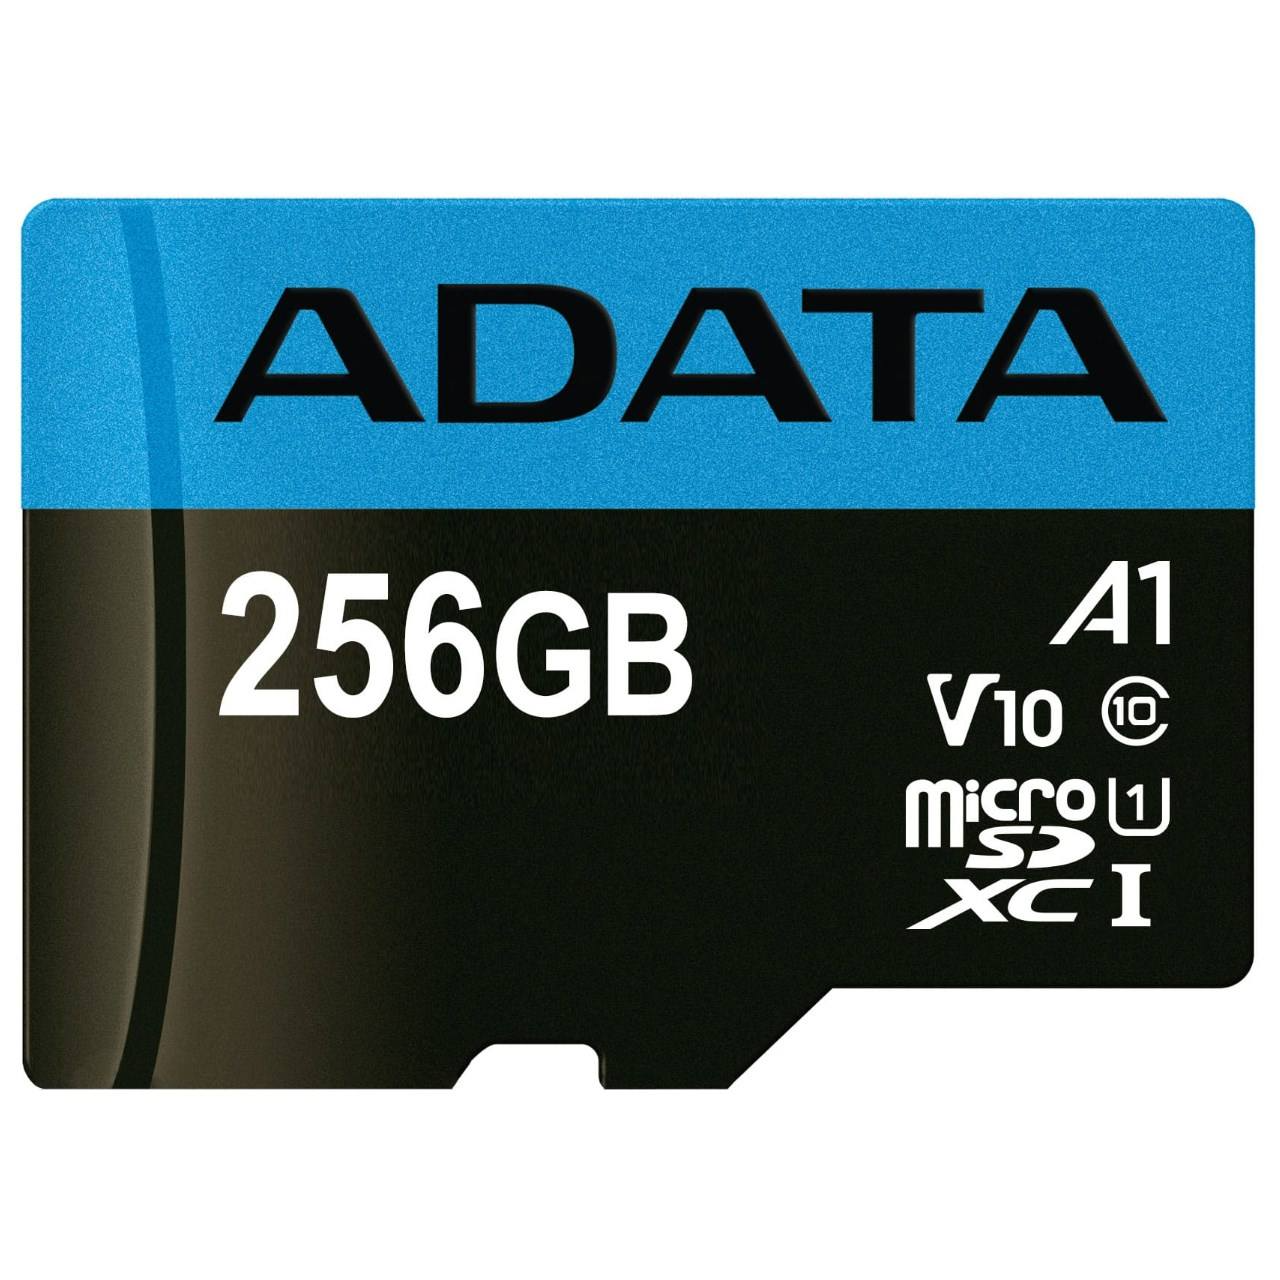 كارت حافظه / Memory Card اي ديتا-ADATA 256GB - Premier V10 A1 UHS-I Class 10 100MBps microSDXC